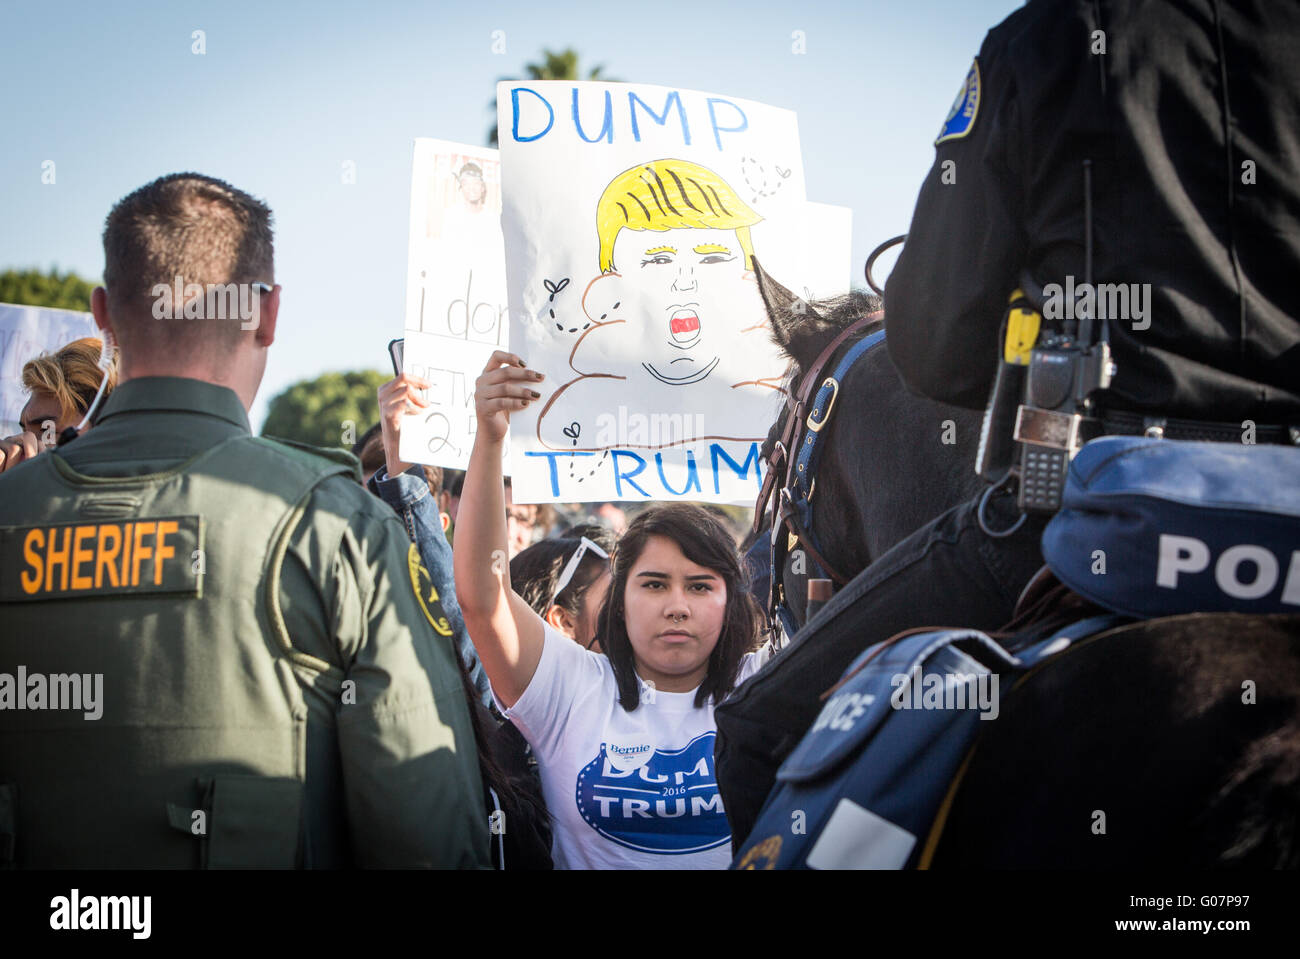 Anti Donald Trump protesters at a Trump campaign rally in California. Stock Photo